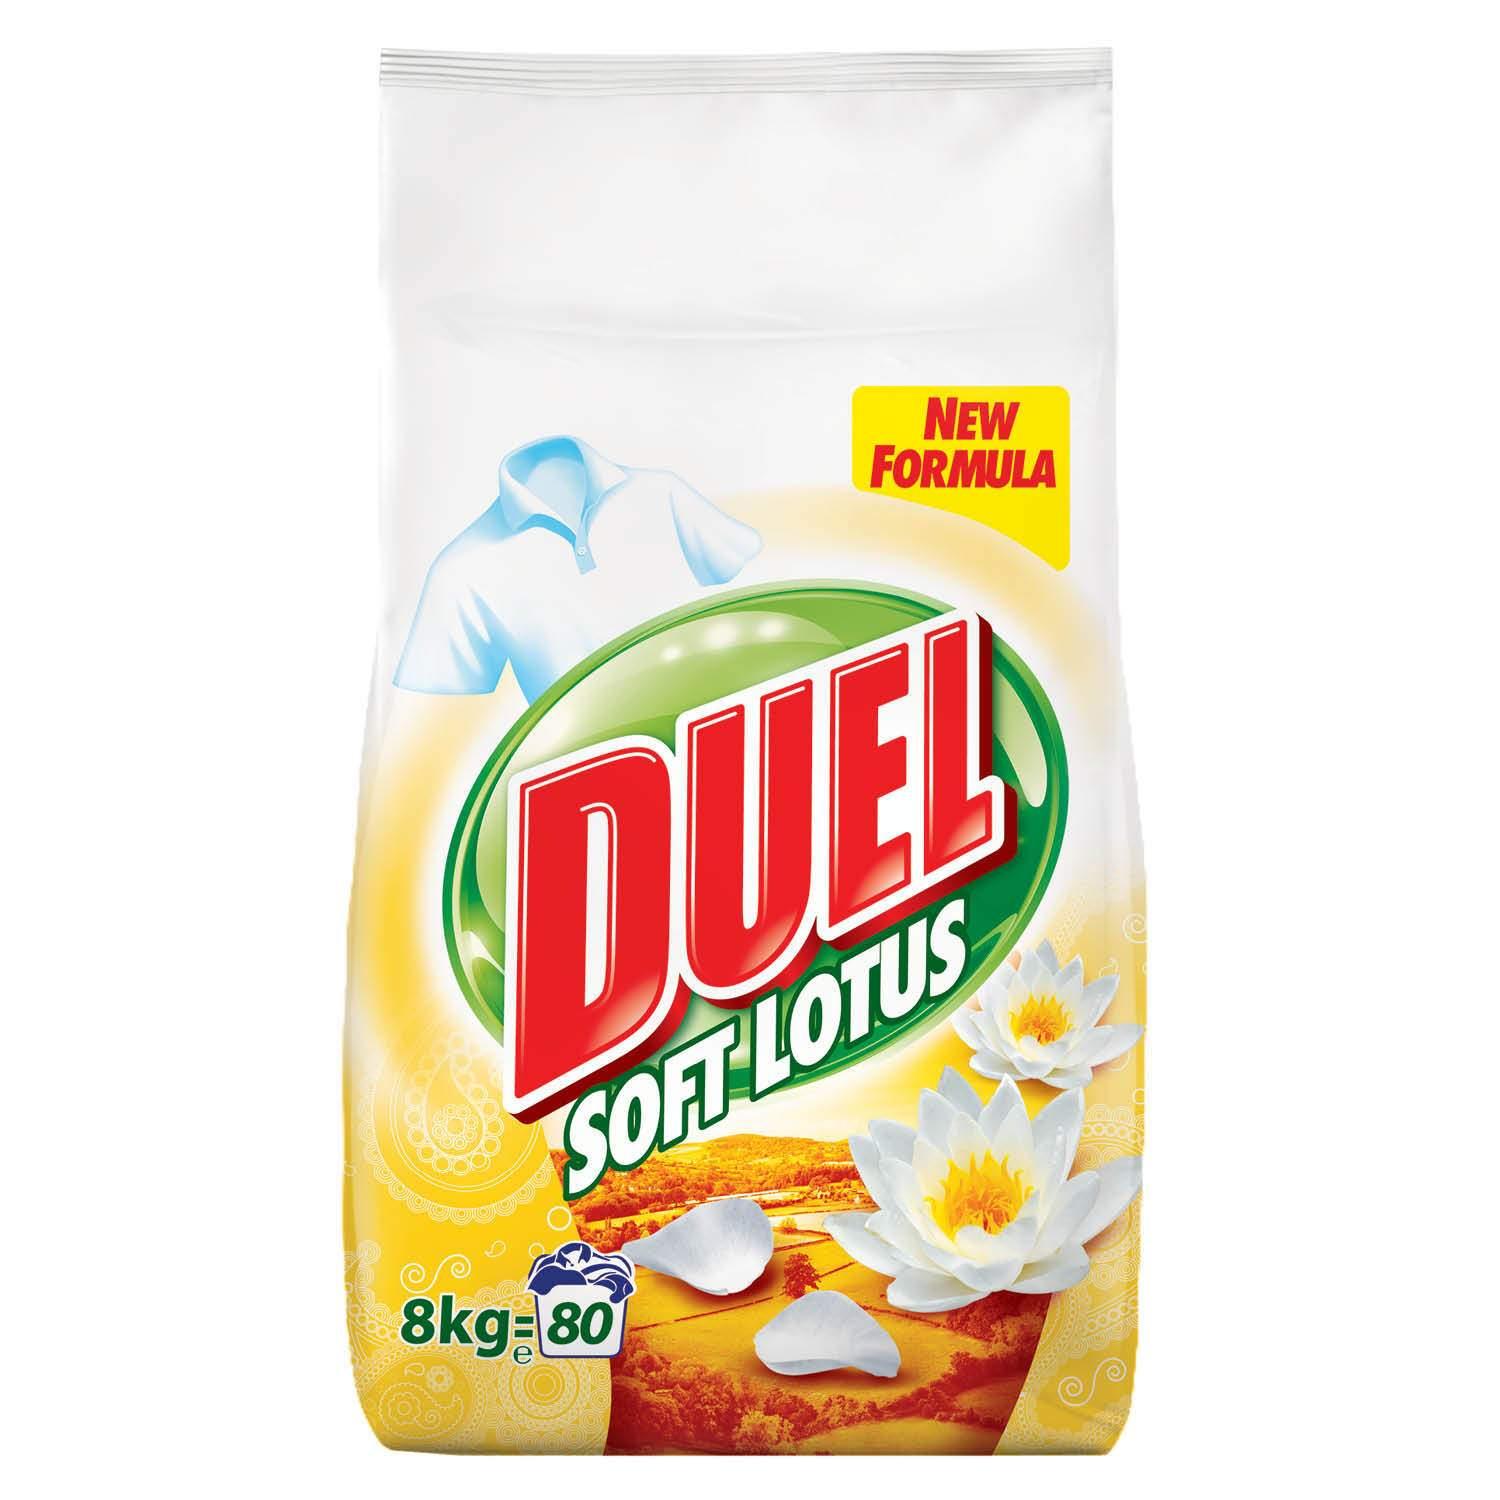 Selected image for DUEL Compact Soft Lotus Prašak za veš, 8 kg